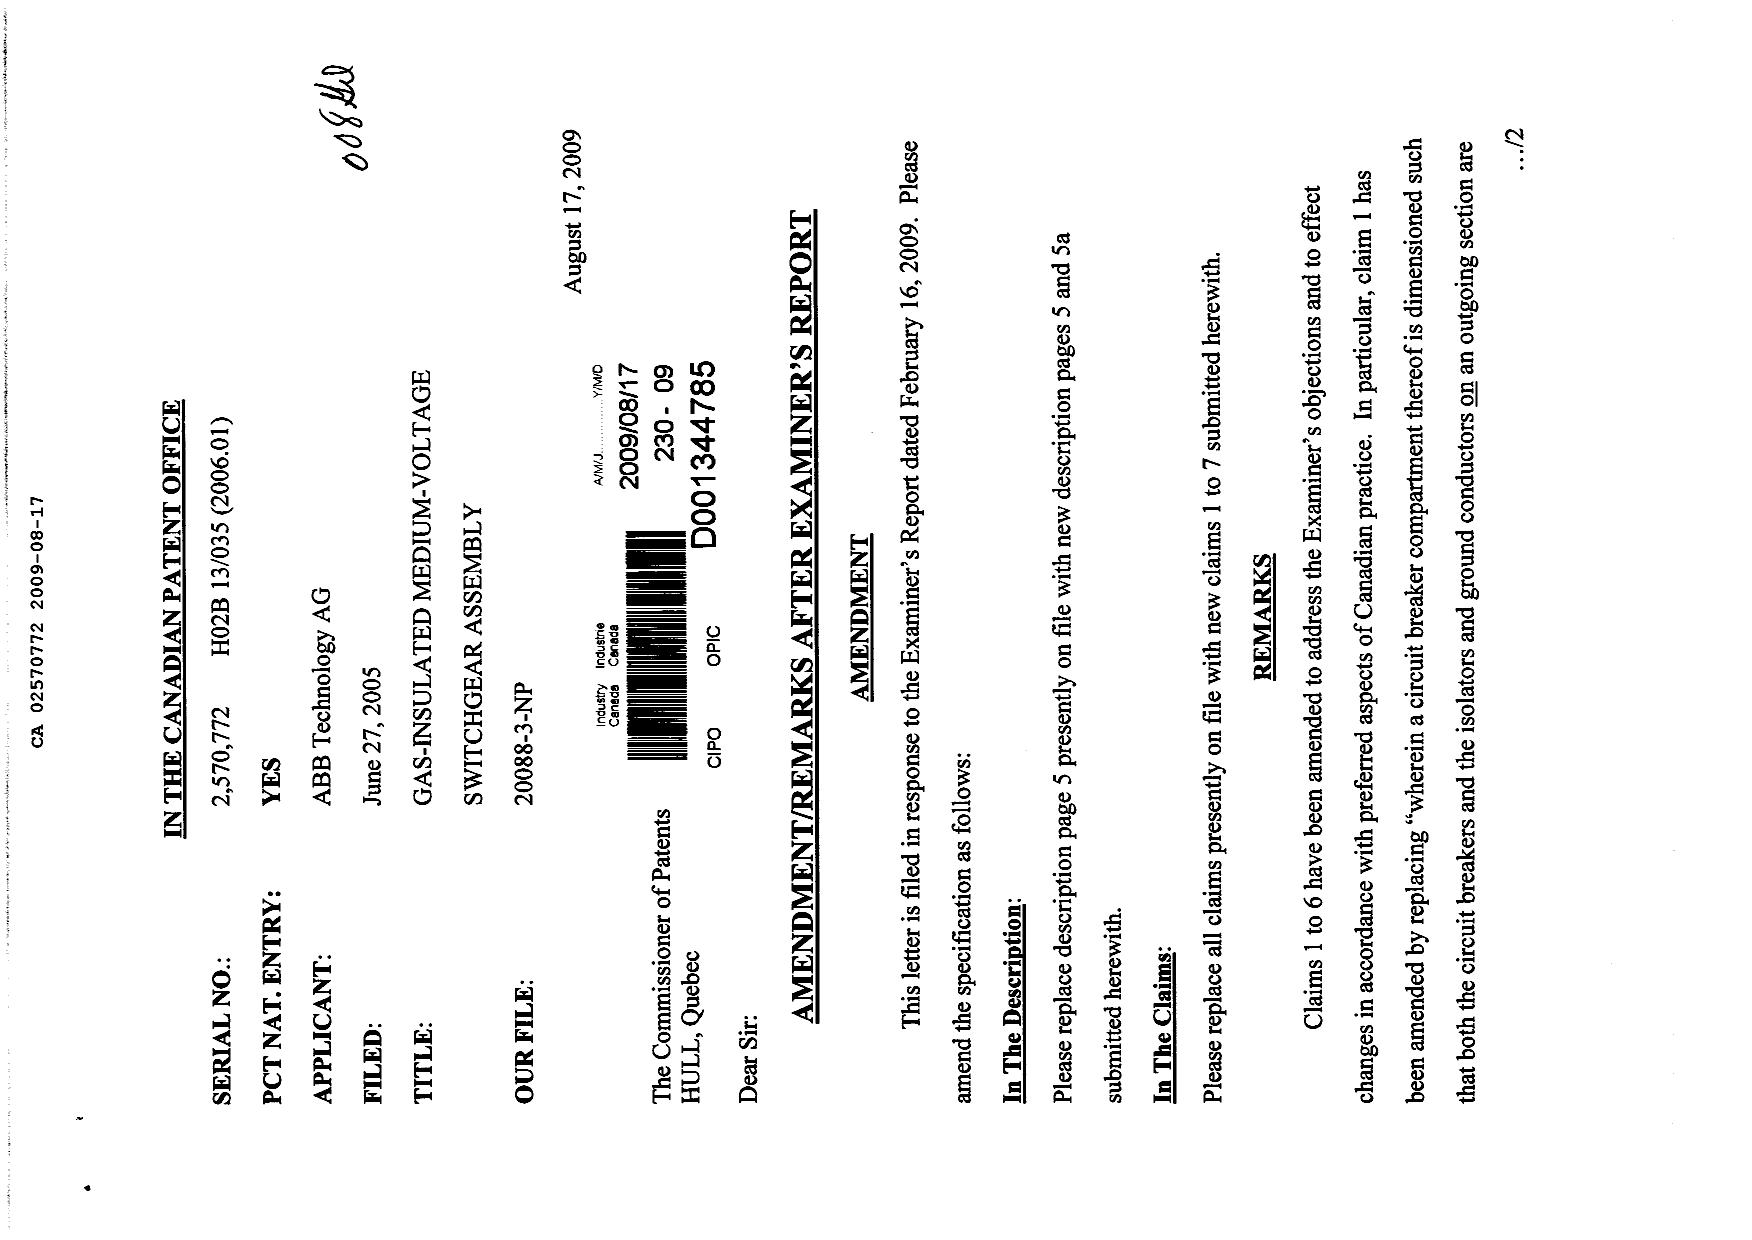 Canadian Patent Document 2570772. Prosecution-Amendment 20081217. Image 1 of 8